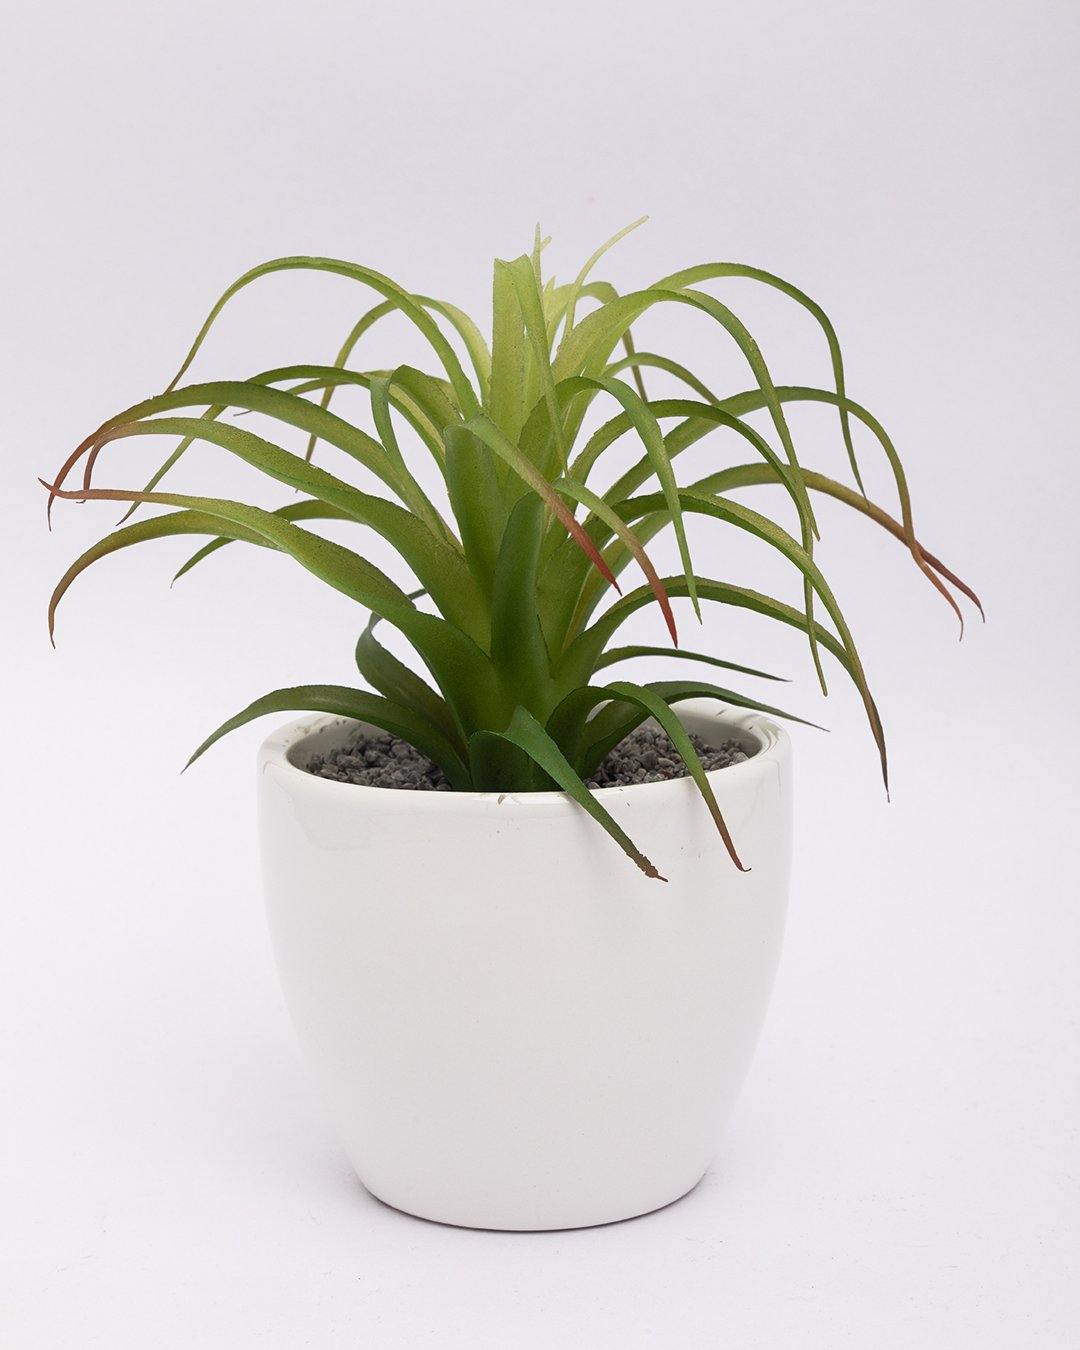 VON CASA Artificial Flower with Pot, Green, Plastic & Ceramic